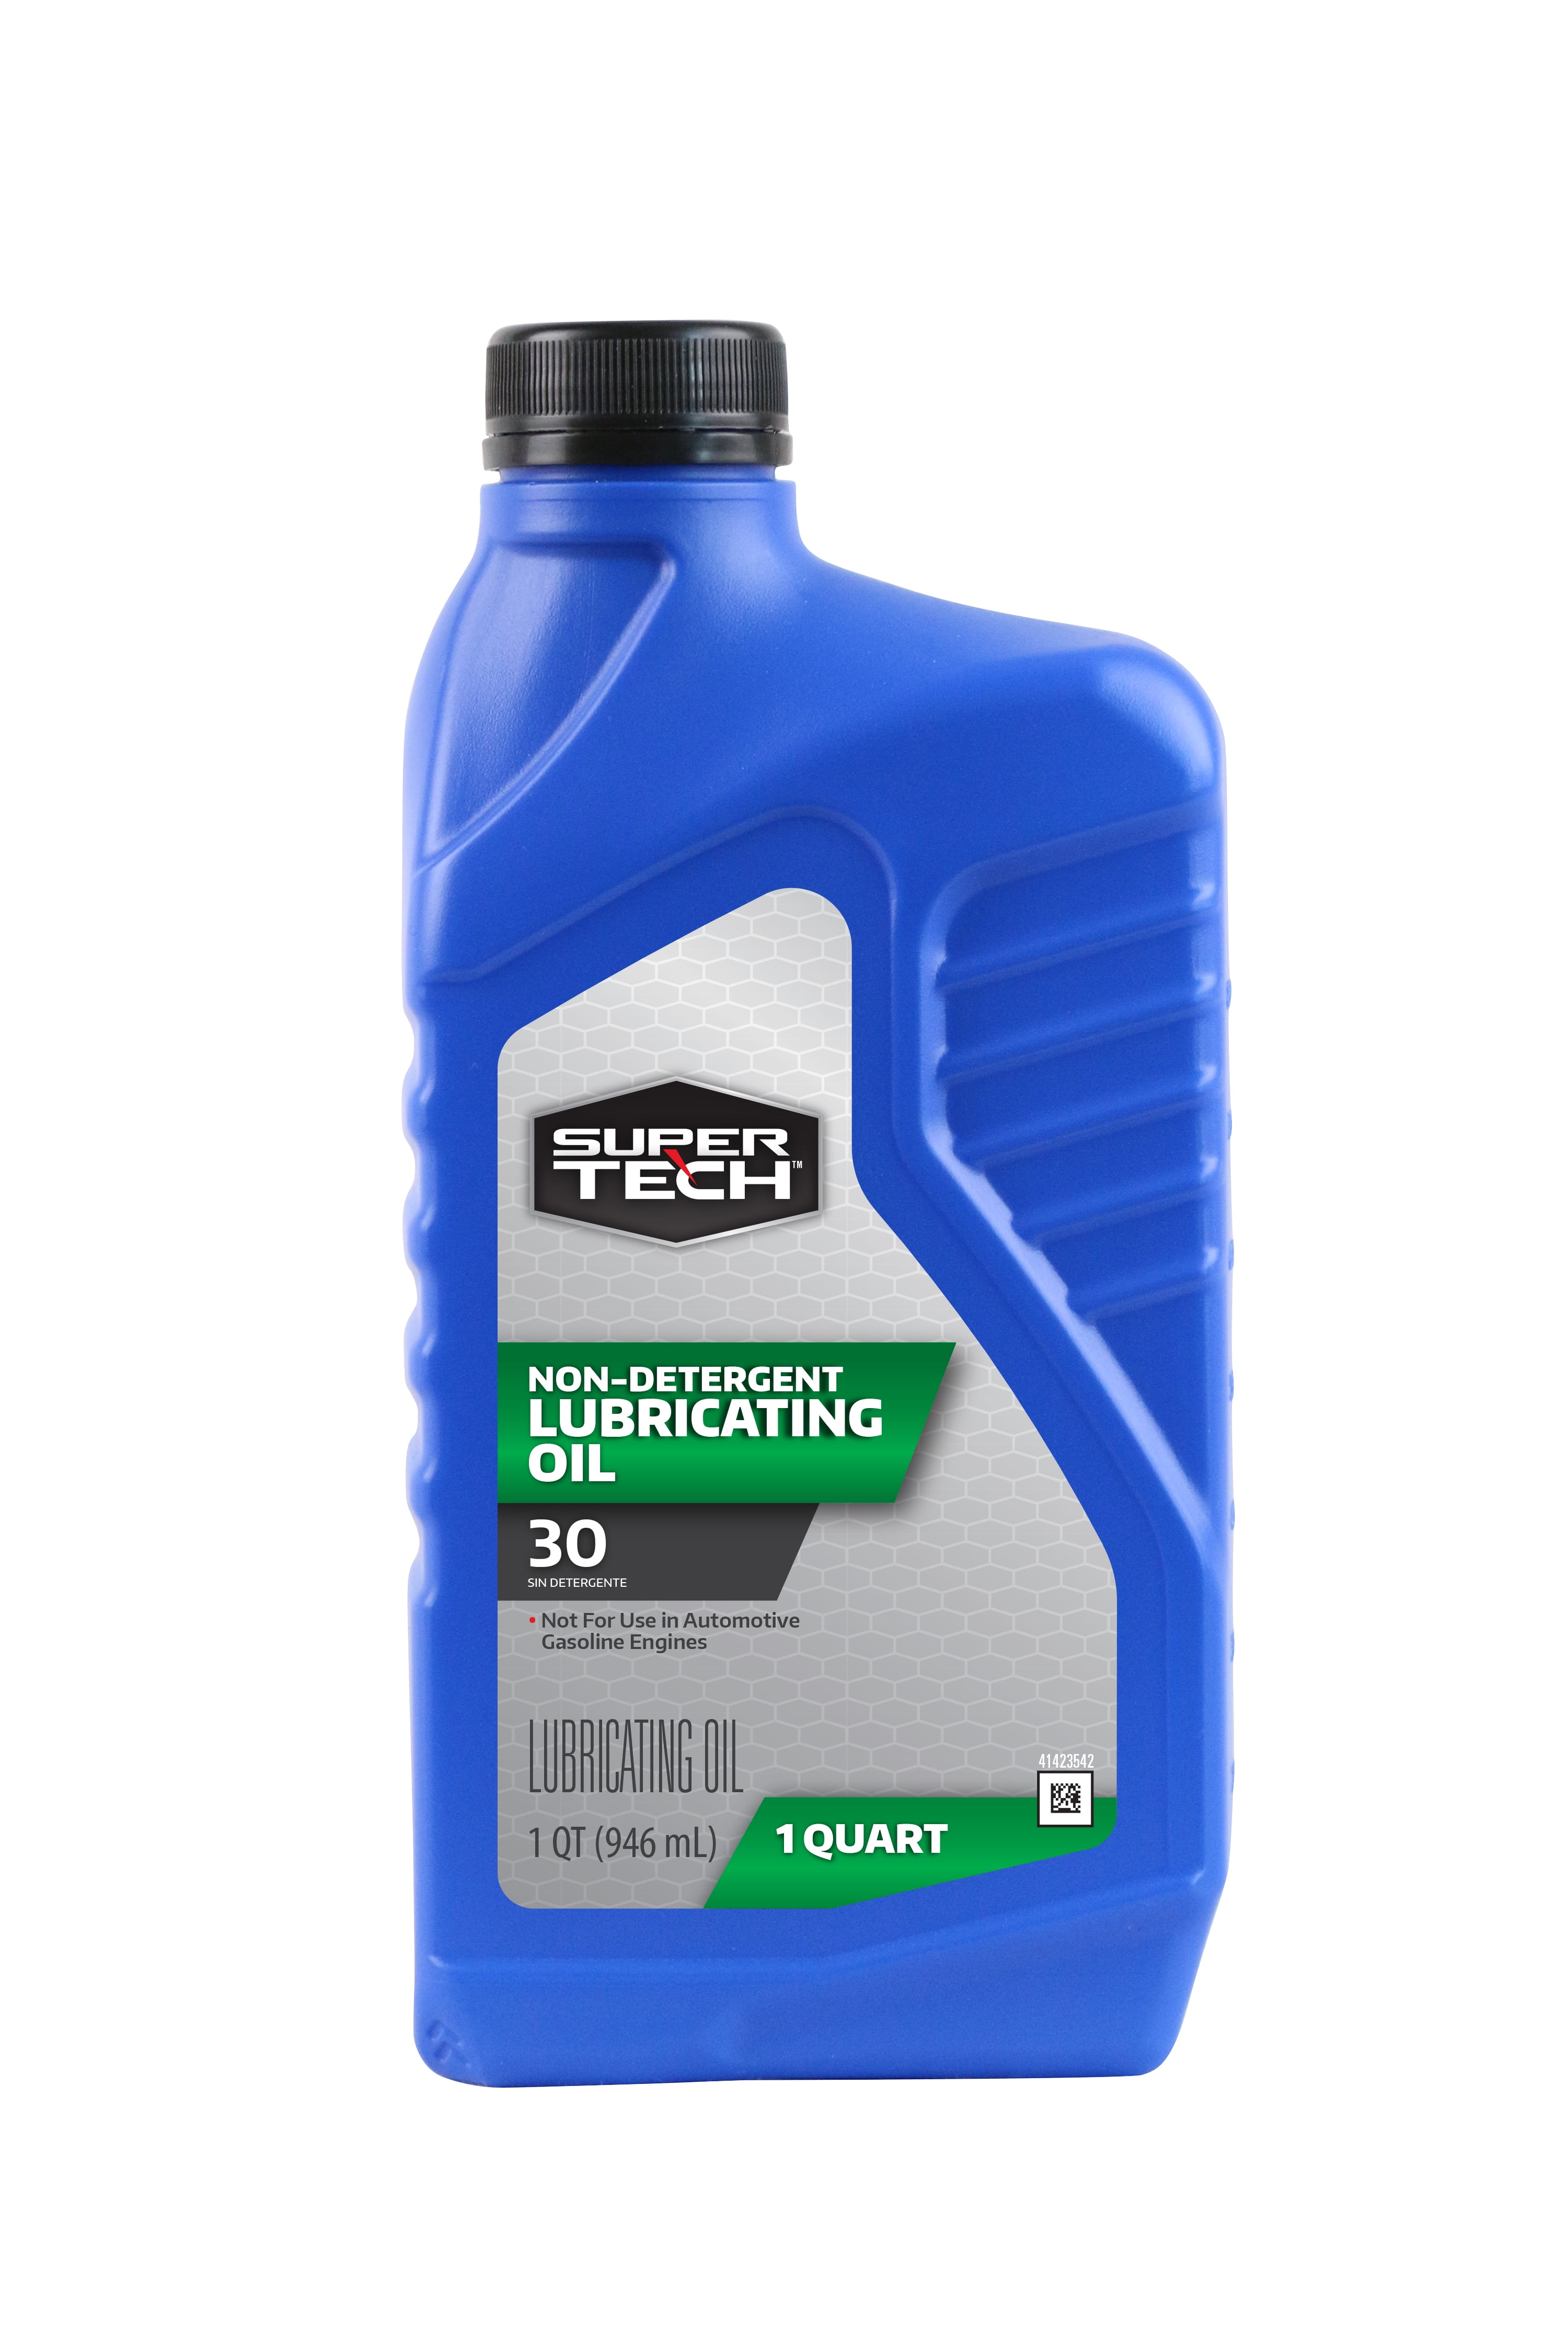 Super Tech Non-Detergent SAE 30W Lubricating Oil, 1 Quart